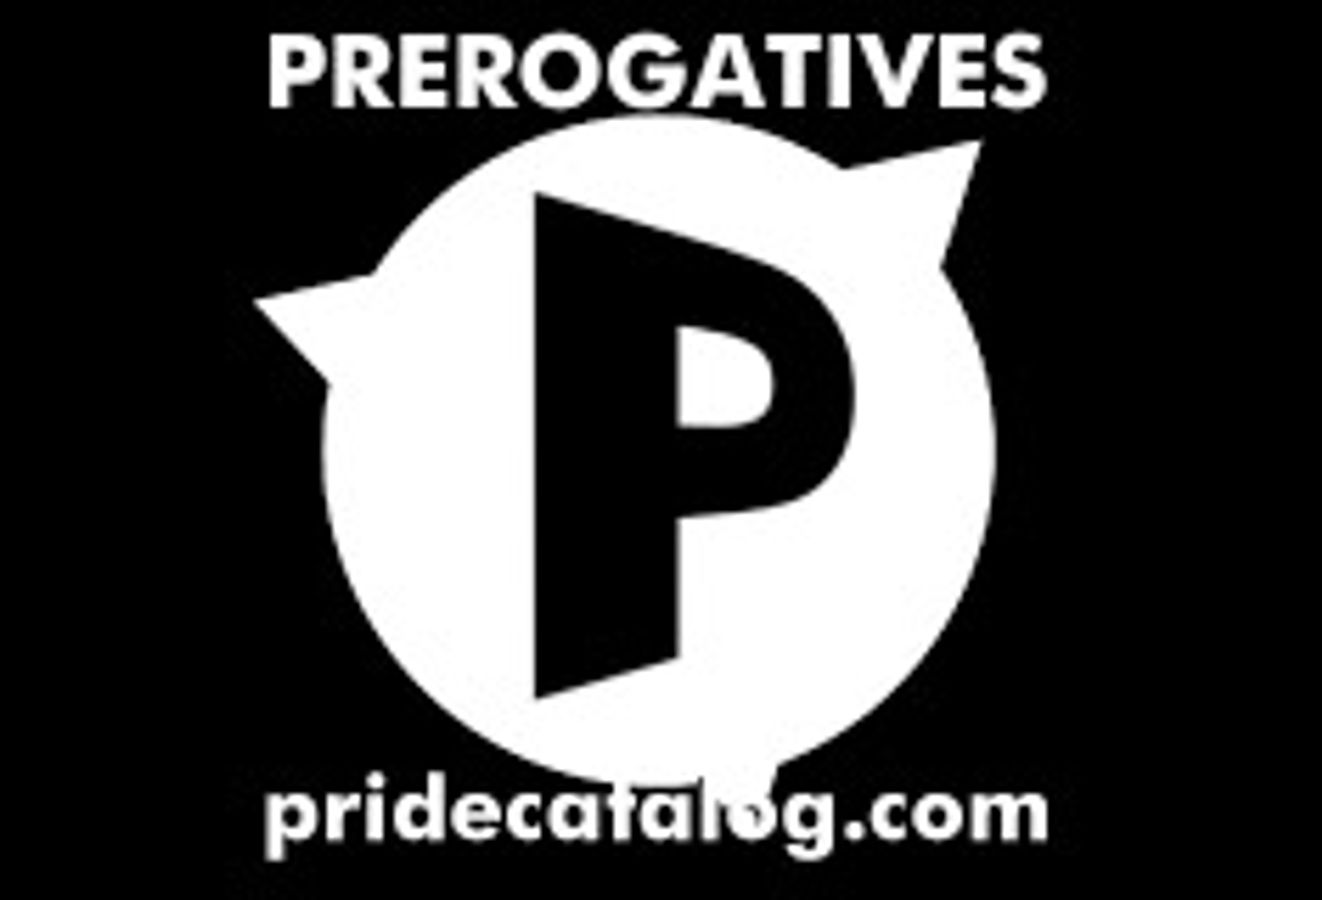 Prerogatives